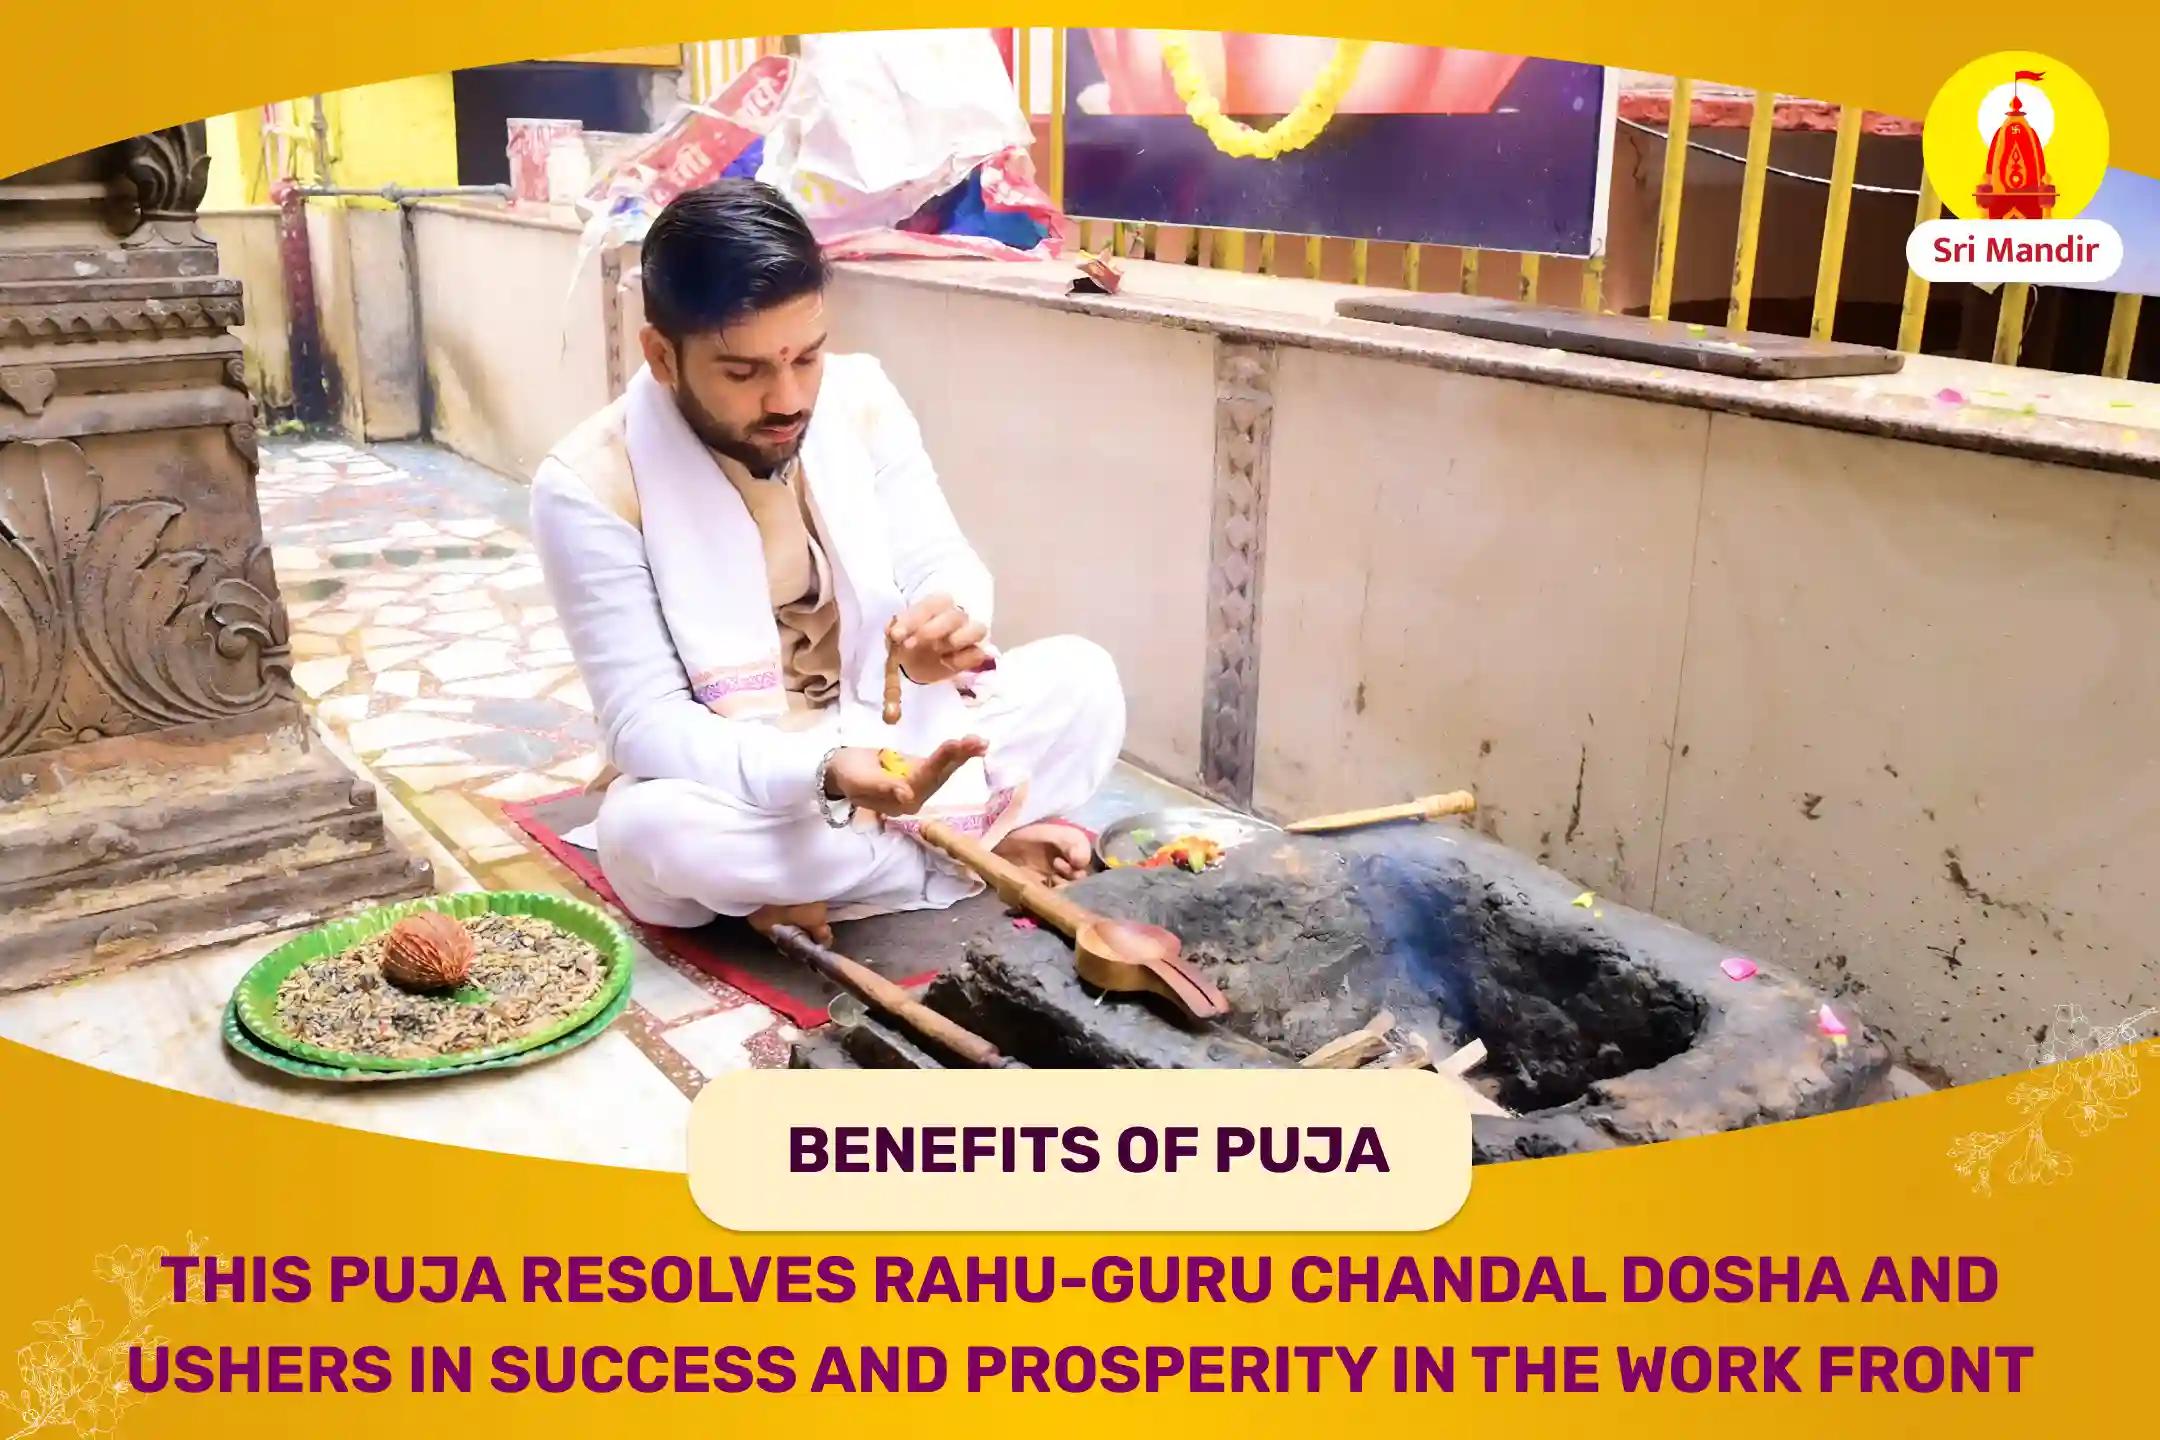 Rahu-Guru Shanti Special Chandal Dosha Nivaran Mahapuja for Prosperity and Material Well-Being